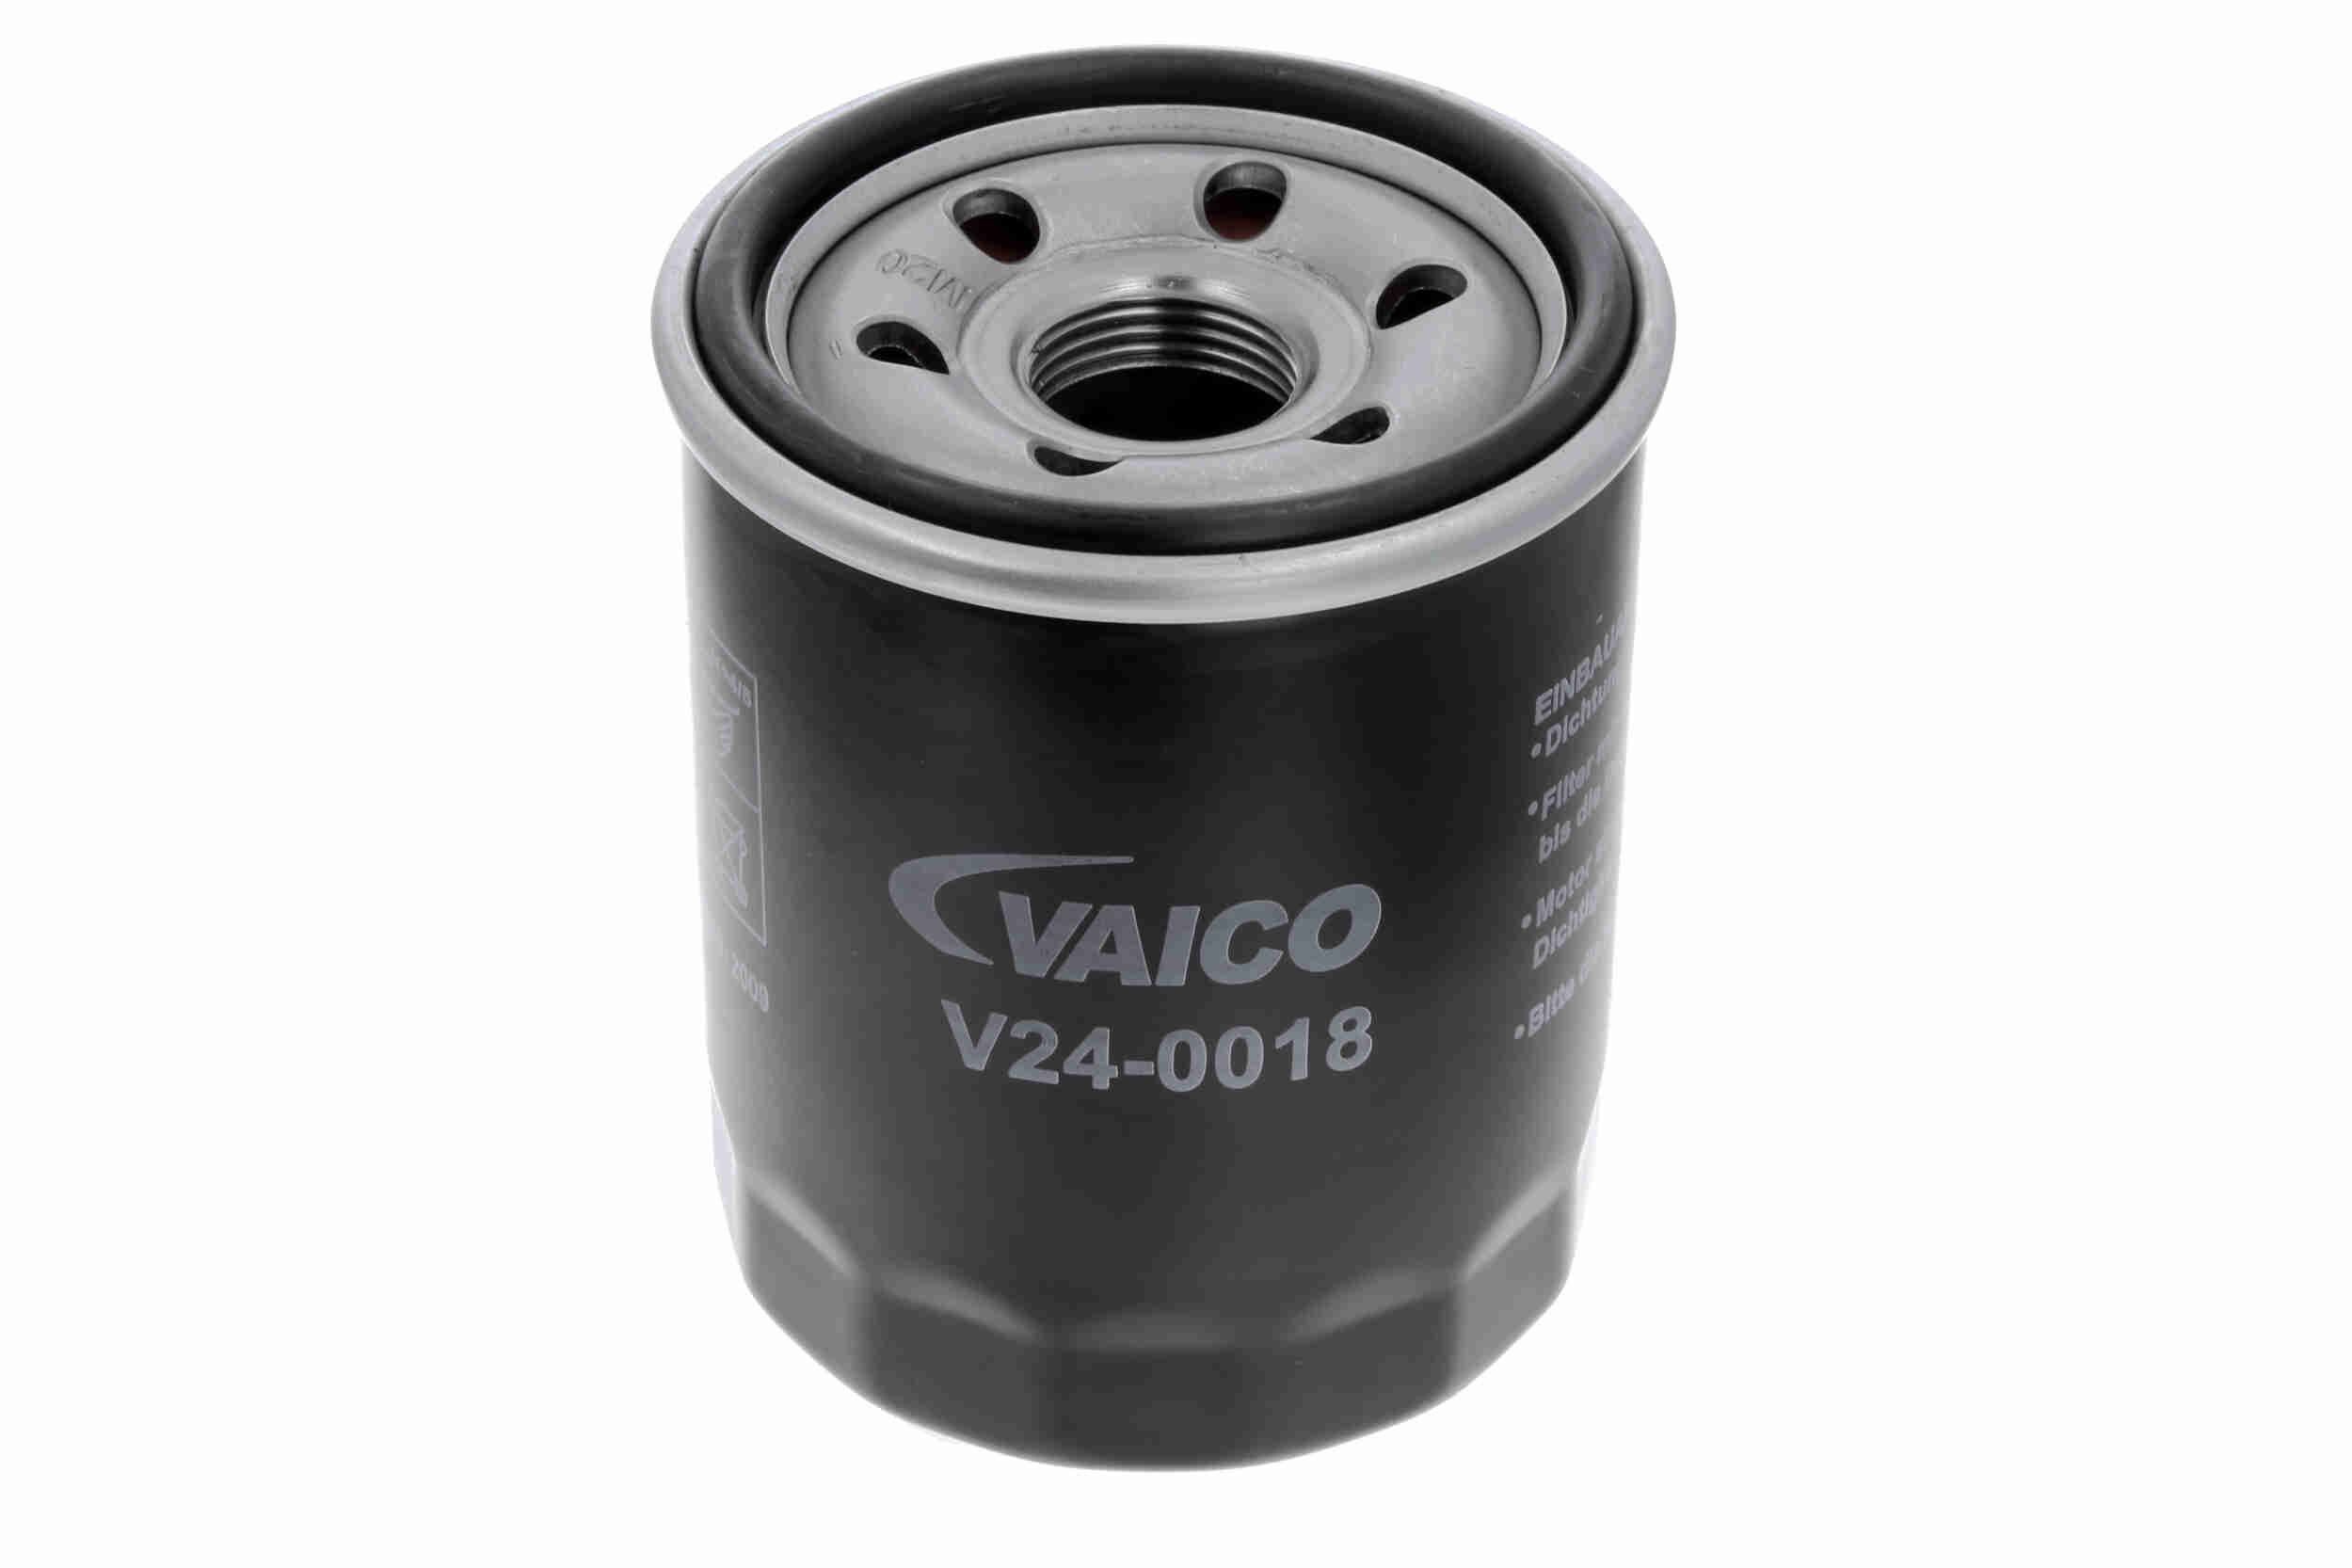 V24-0018 VAICO Anschraubfilter, mit einem Rücklaufsperrventil, Original VAICO Qualität Innendurchmesser 2: 54mm, Innendurchmesser 2: 62mm, Ø: 66mm, Ø: 67mm, Höhe: 90mm Ölfilter V24-0018 günstig kaufen